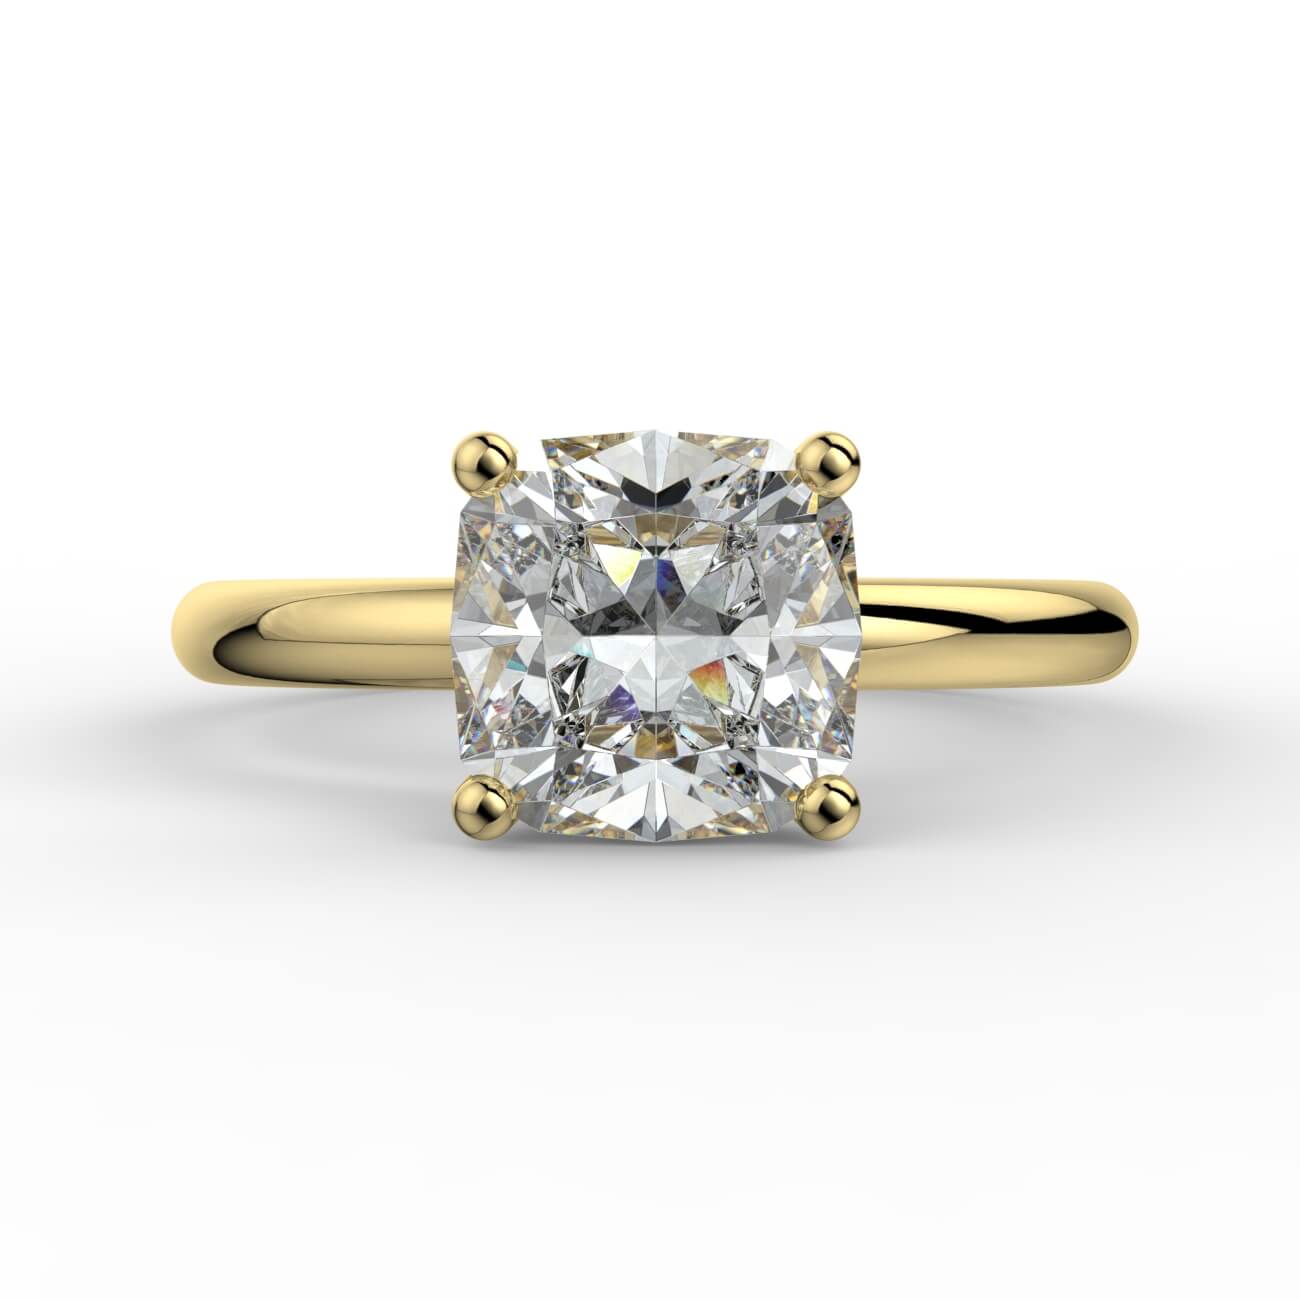 Solitaire cushion cut diamond engagement ring in yellow gold – Australian Diamond Network